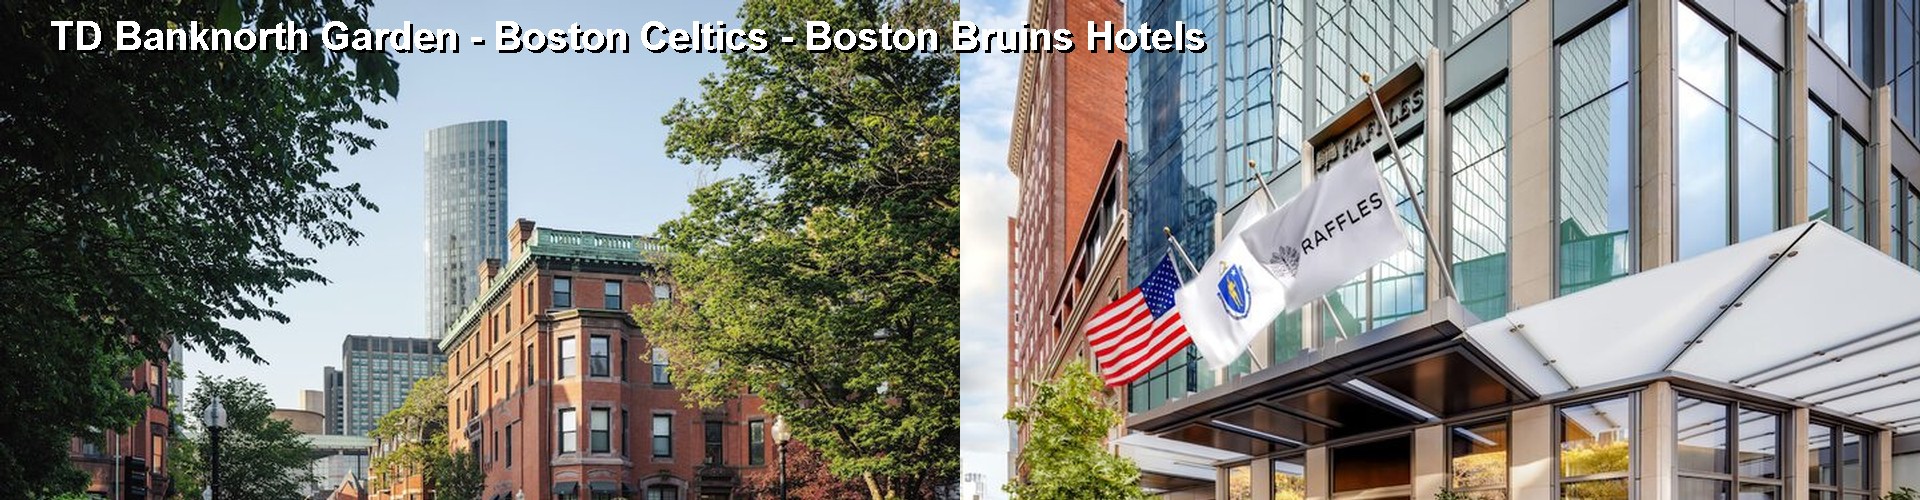 5 Best Hotels near TD Banknorth Garden - Boston Celtics - Boston Bruins